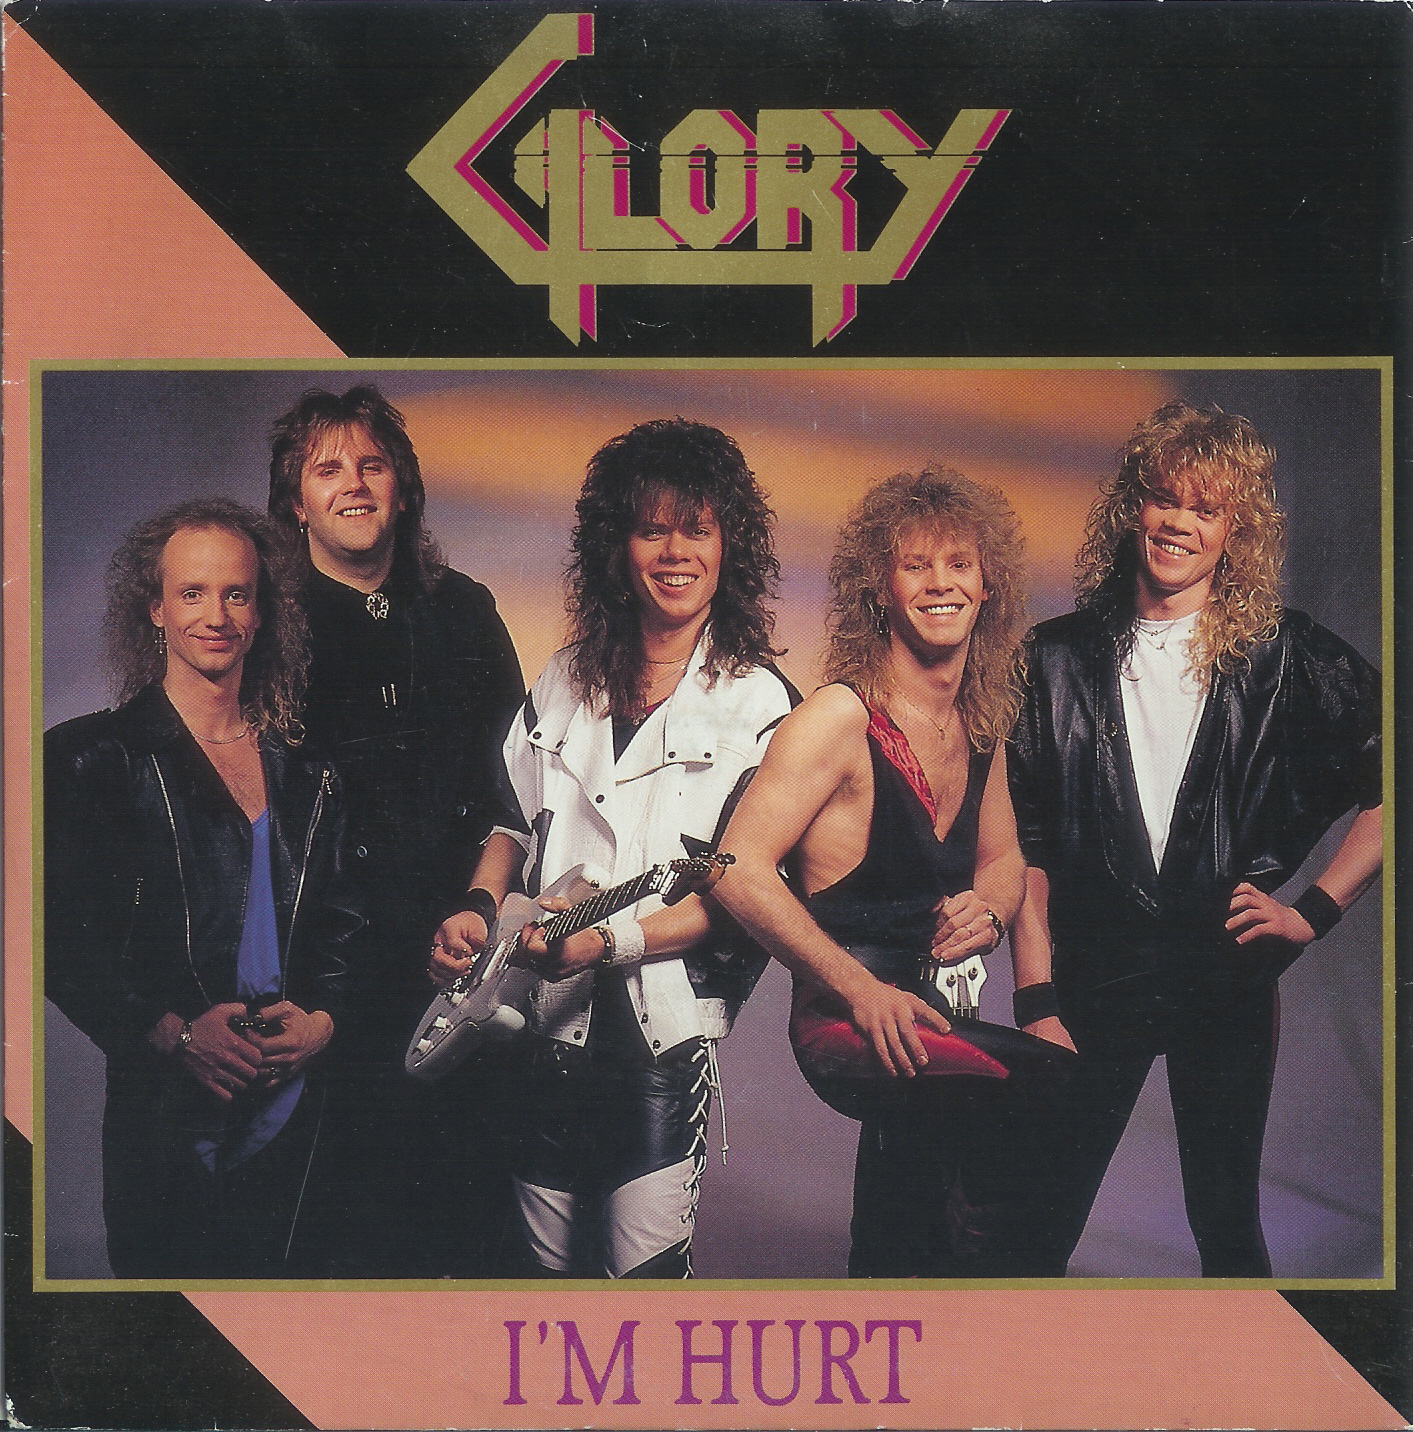 First glory. Glory группа. Glory years, 1987. October Glory Band. Rock grupa Glory album positive buoyant.